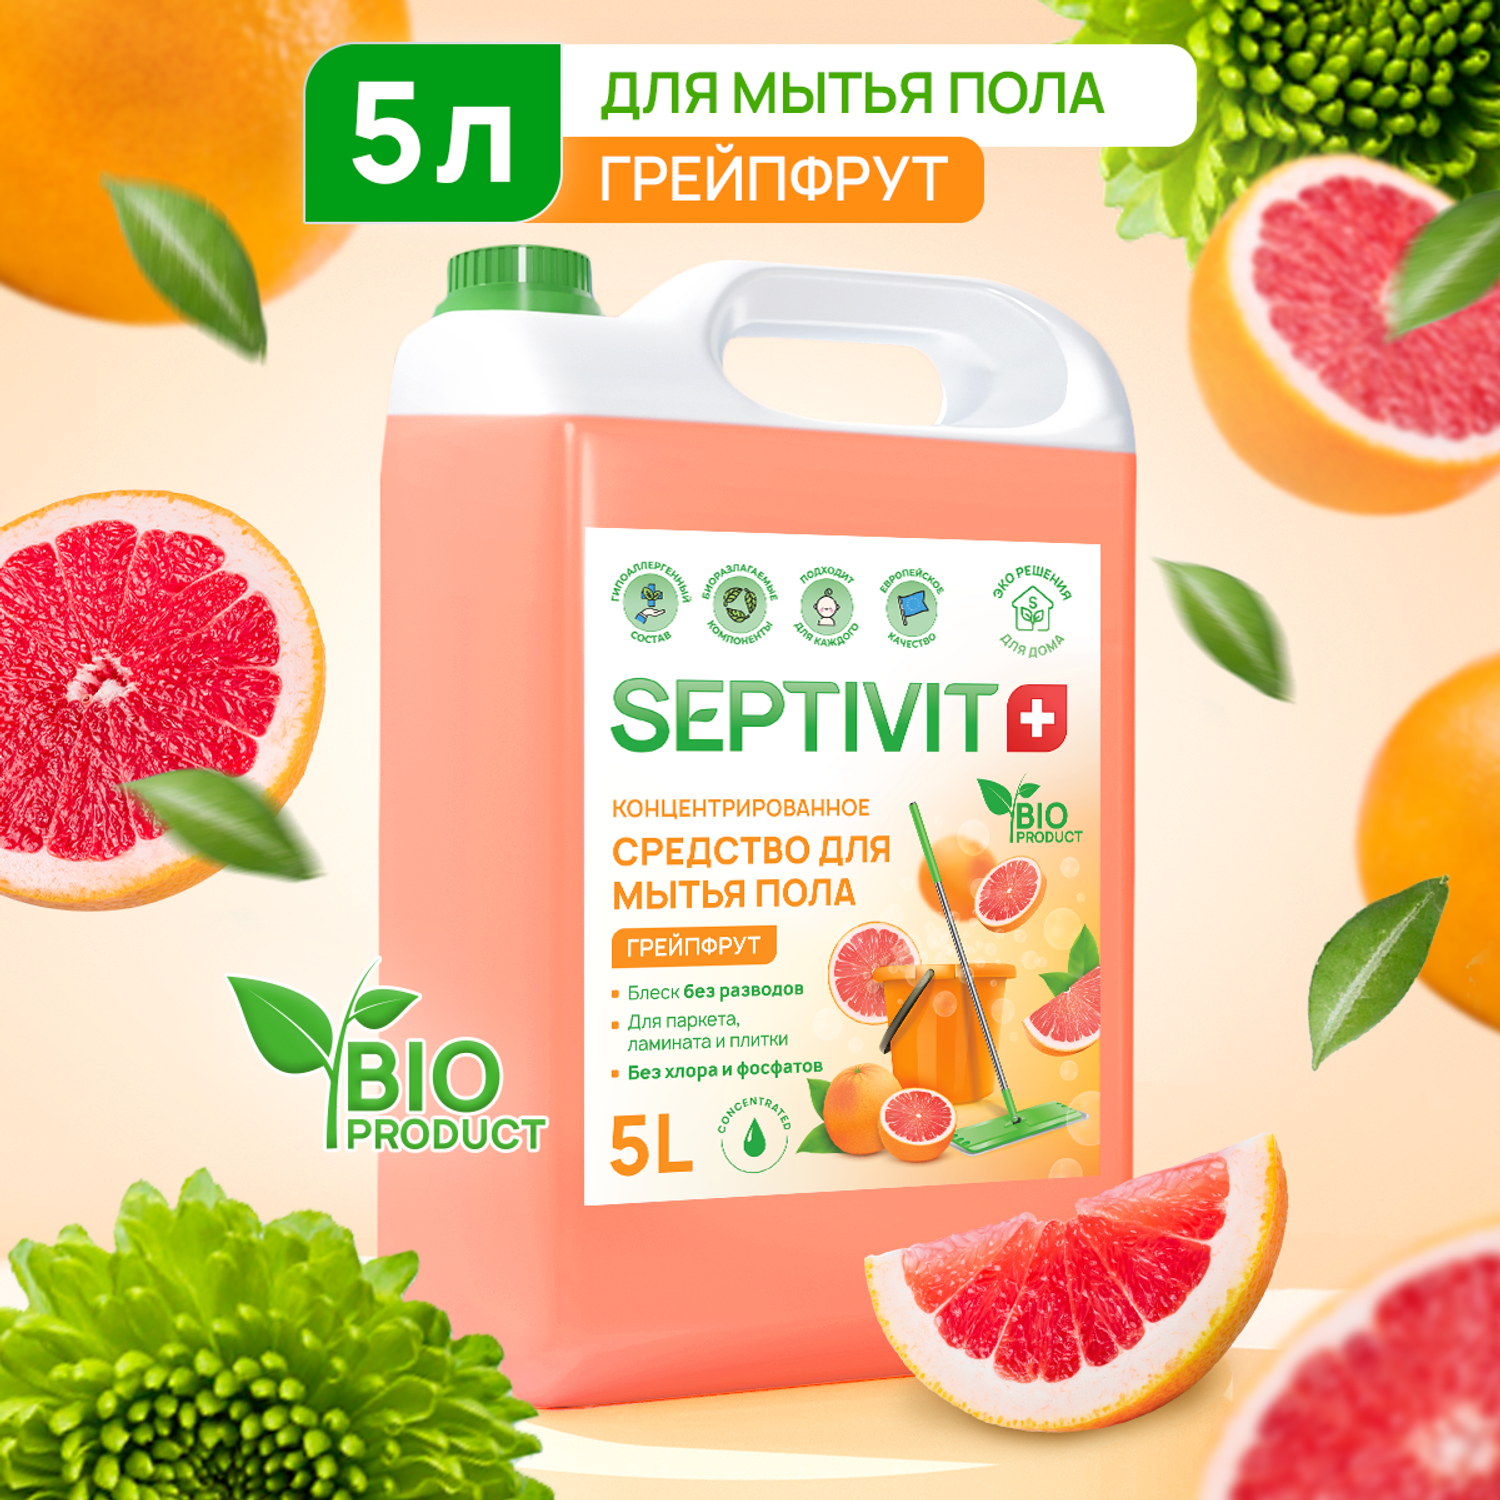 Средство для мытья полов SEPTIVIT Premium Грейпфрут 5 л - фото 1